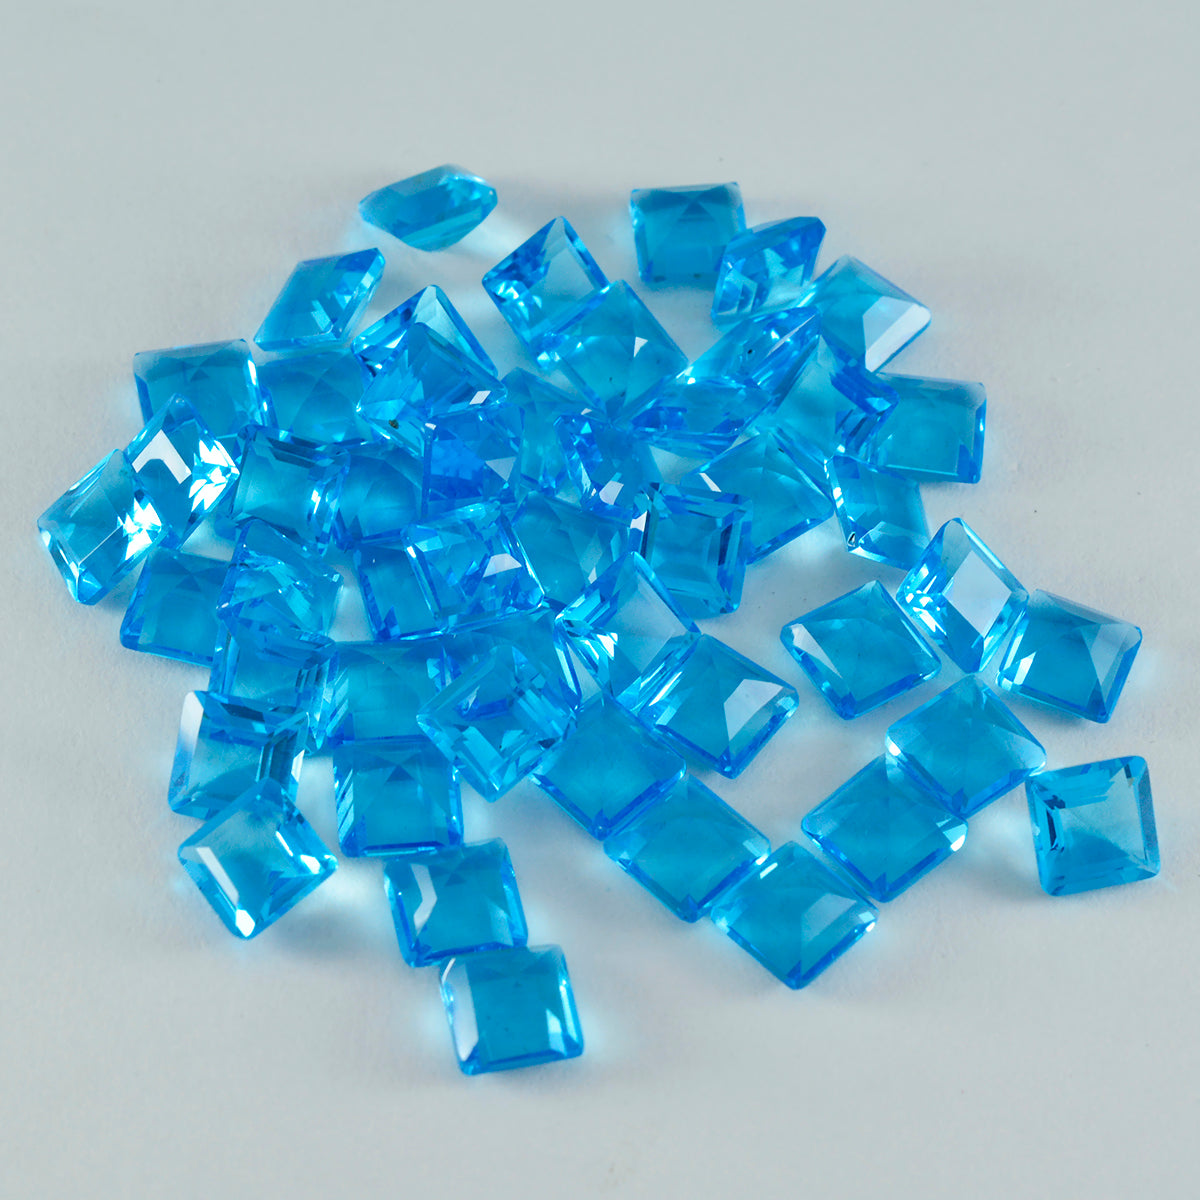 riyogems 1 pezzo di topazio blu cz sfaccettato 6x6 mm di forma quadrata con gemme di qualità attraente